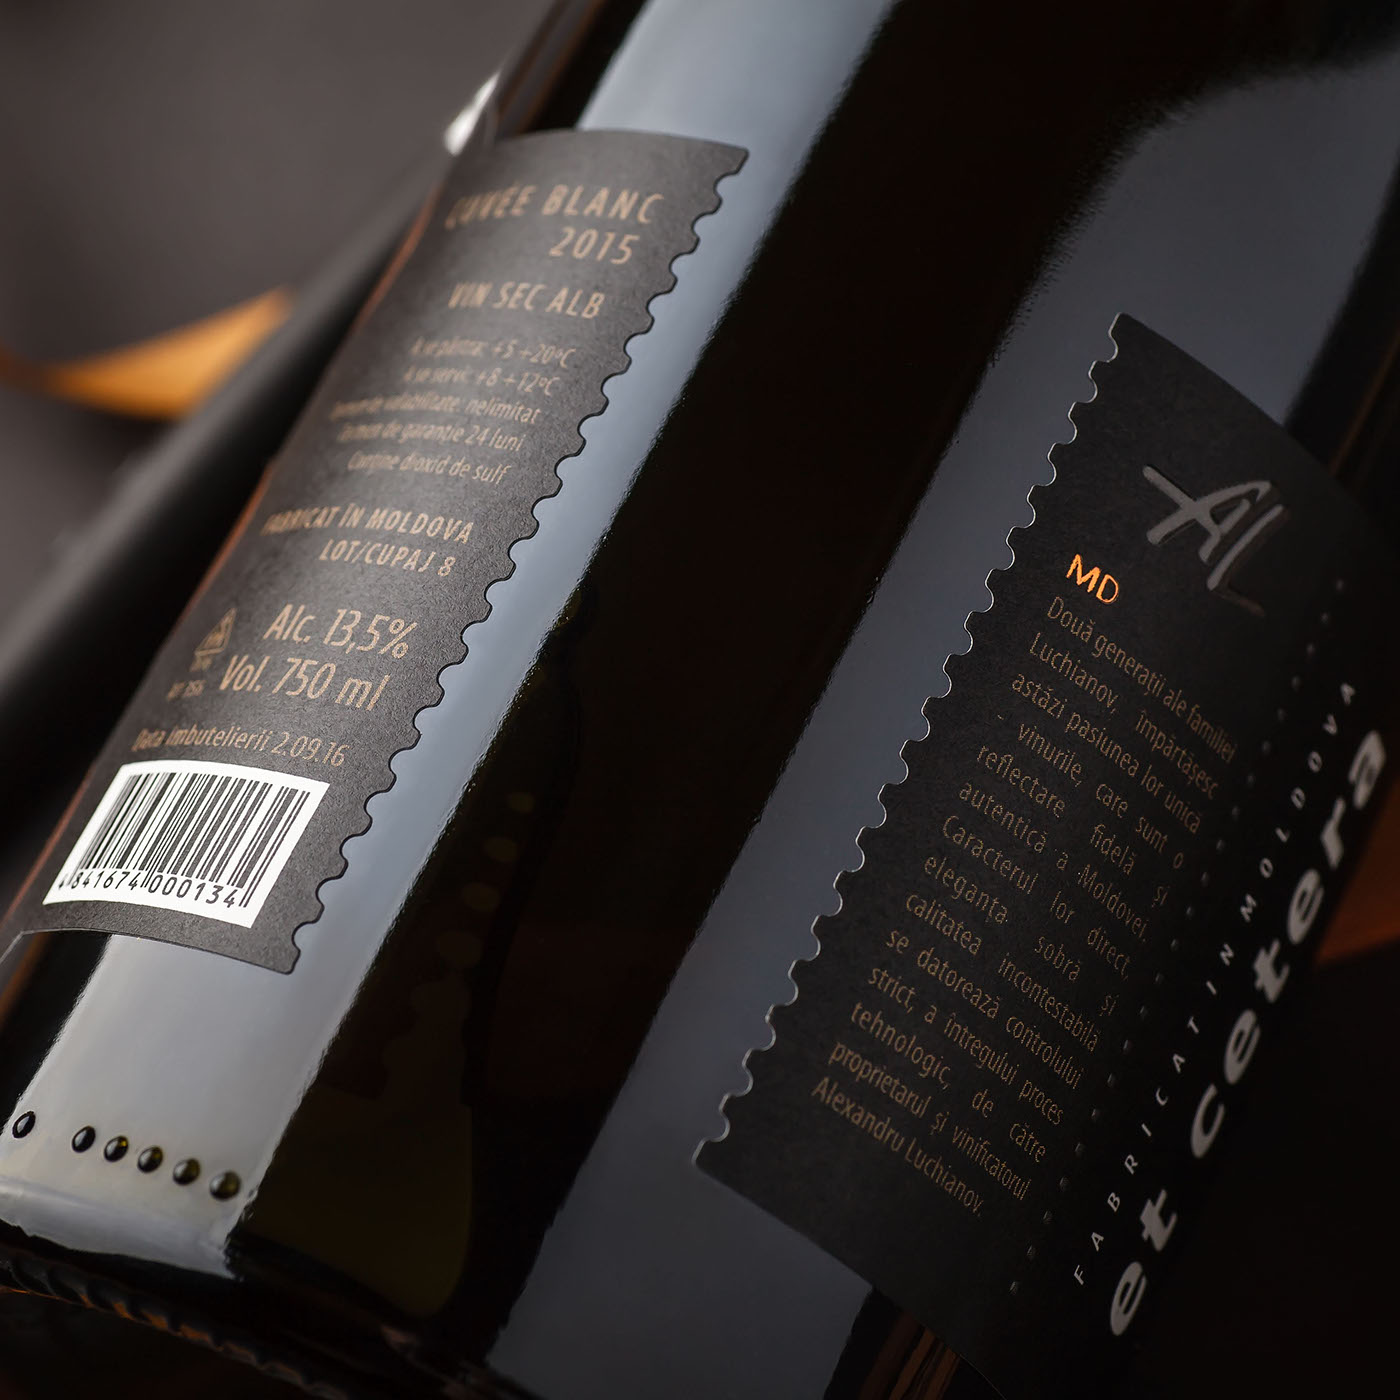 valerii sumilov shumilovedesign Packaging et cetera wine label packaging design Photography  artistic